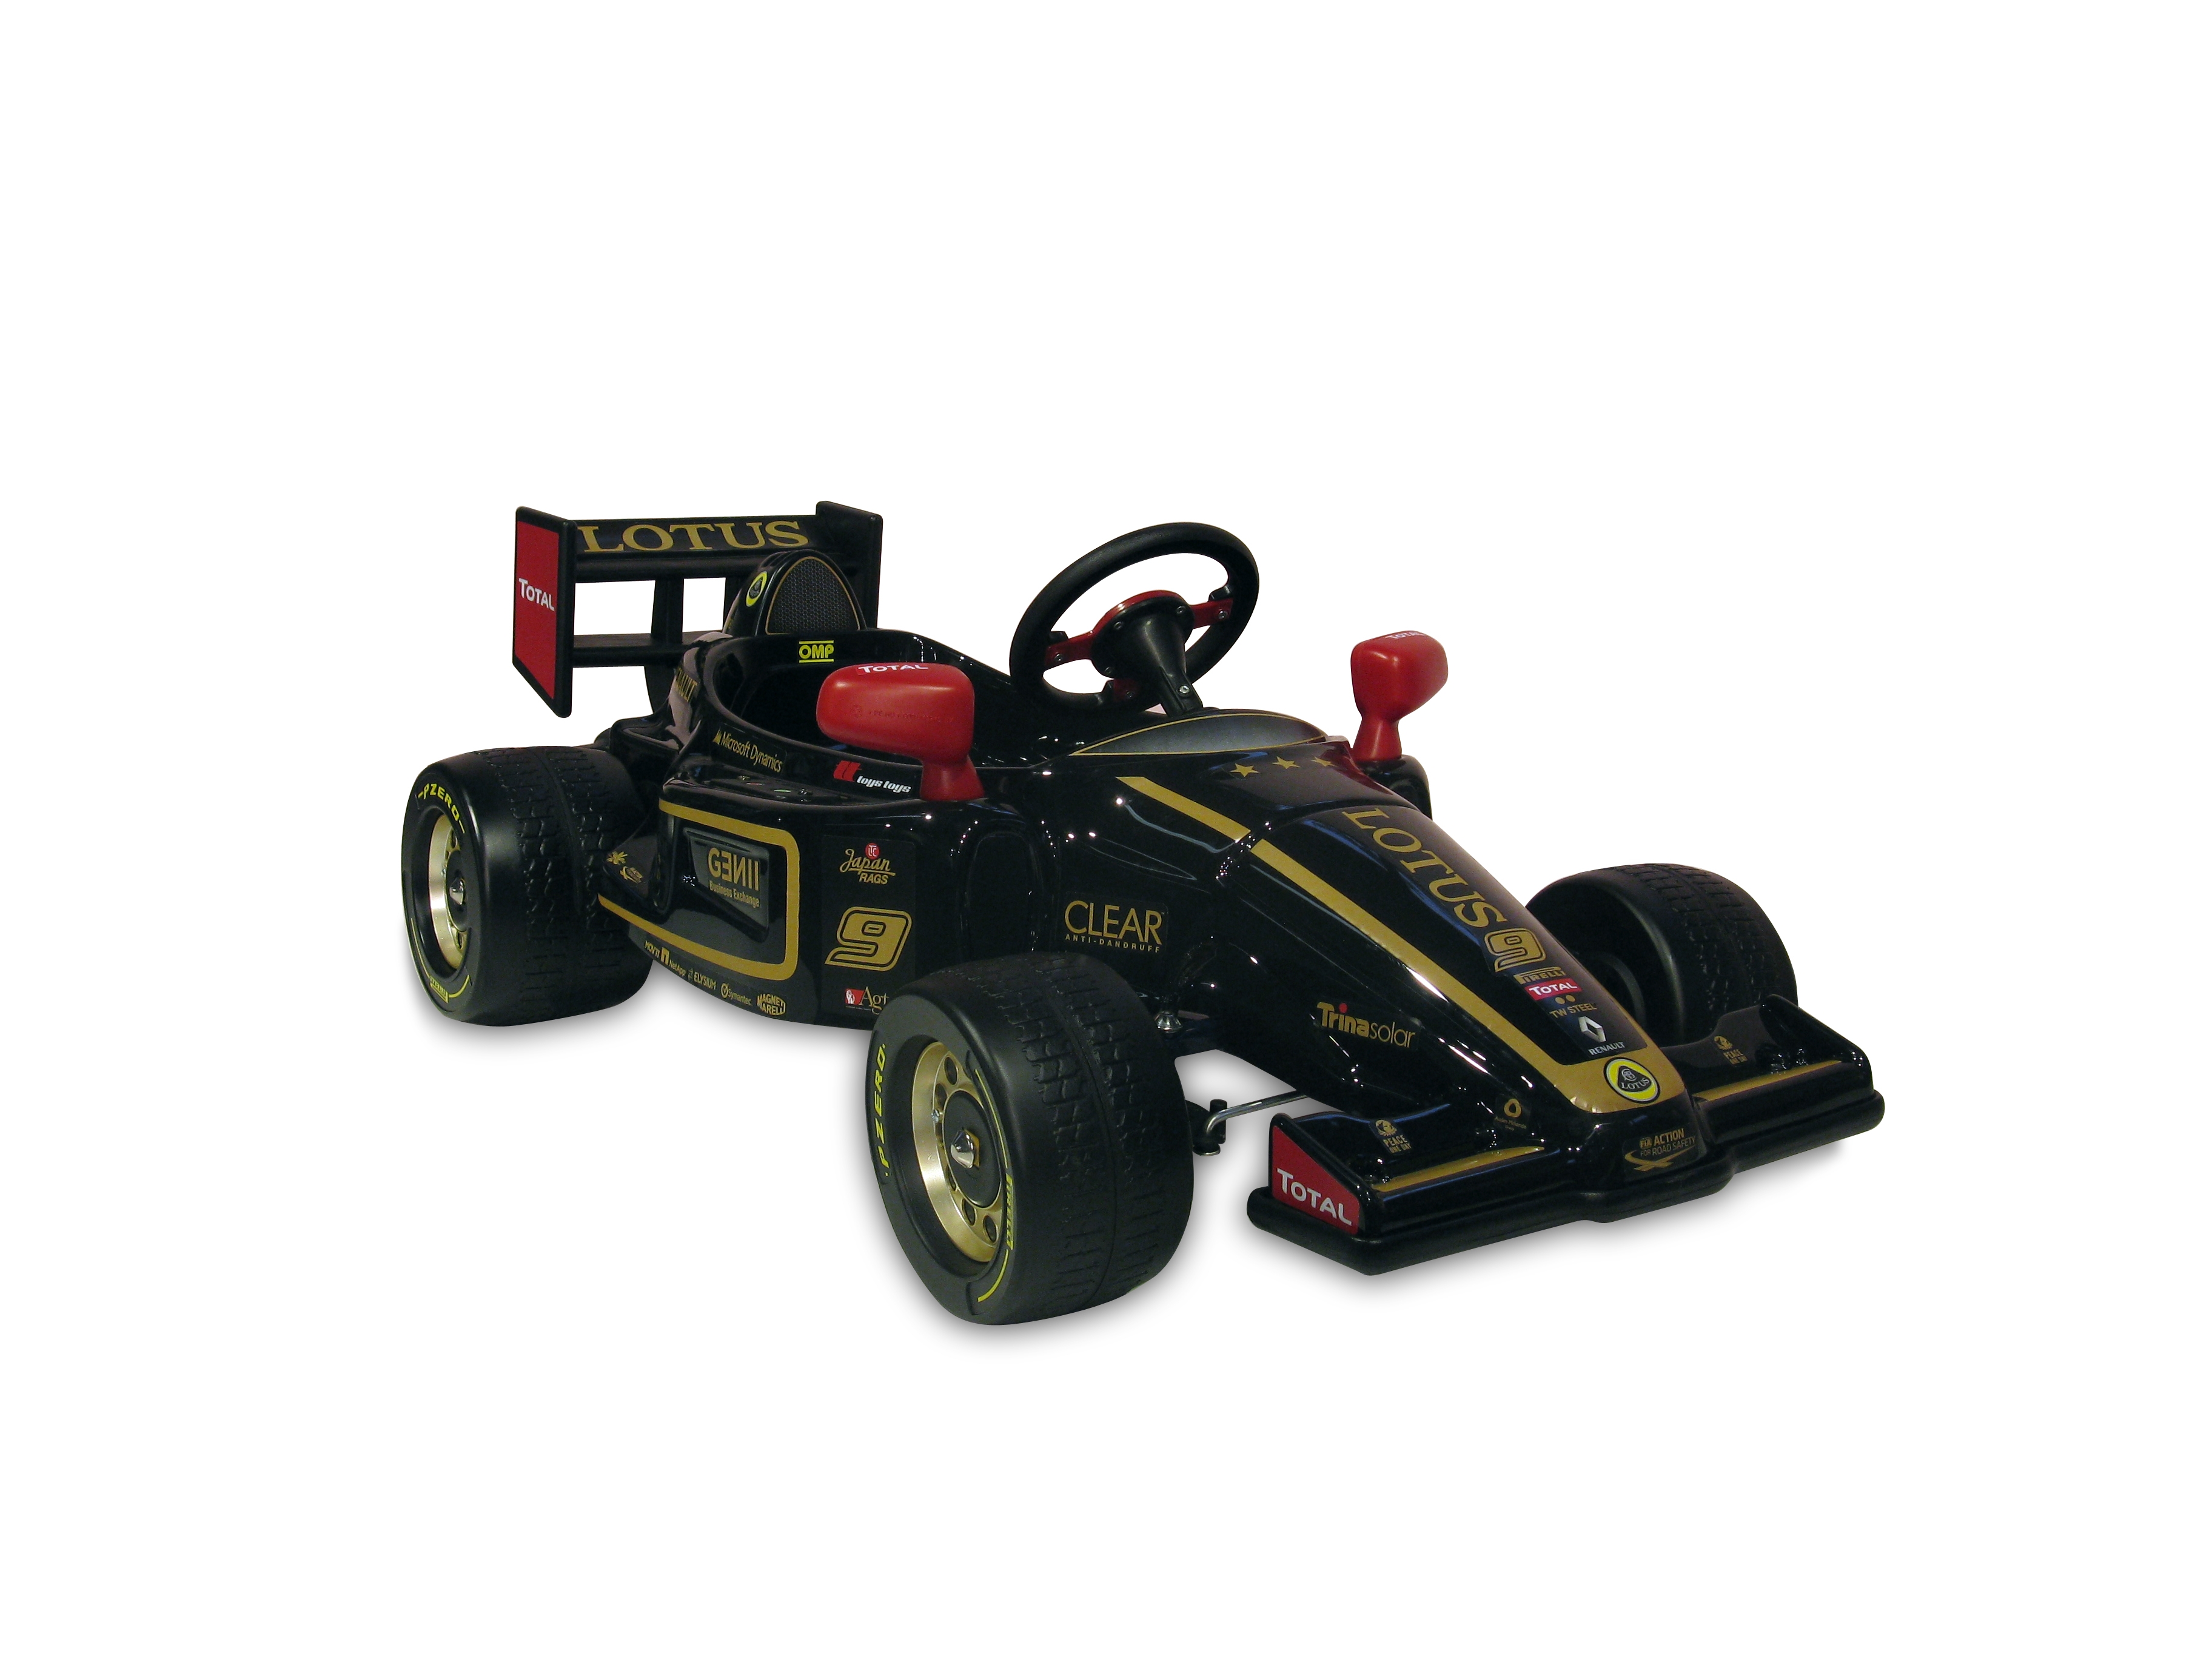 12v Licensed Lotus F1 Ride-on Racing Car